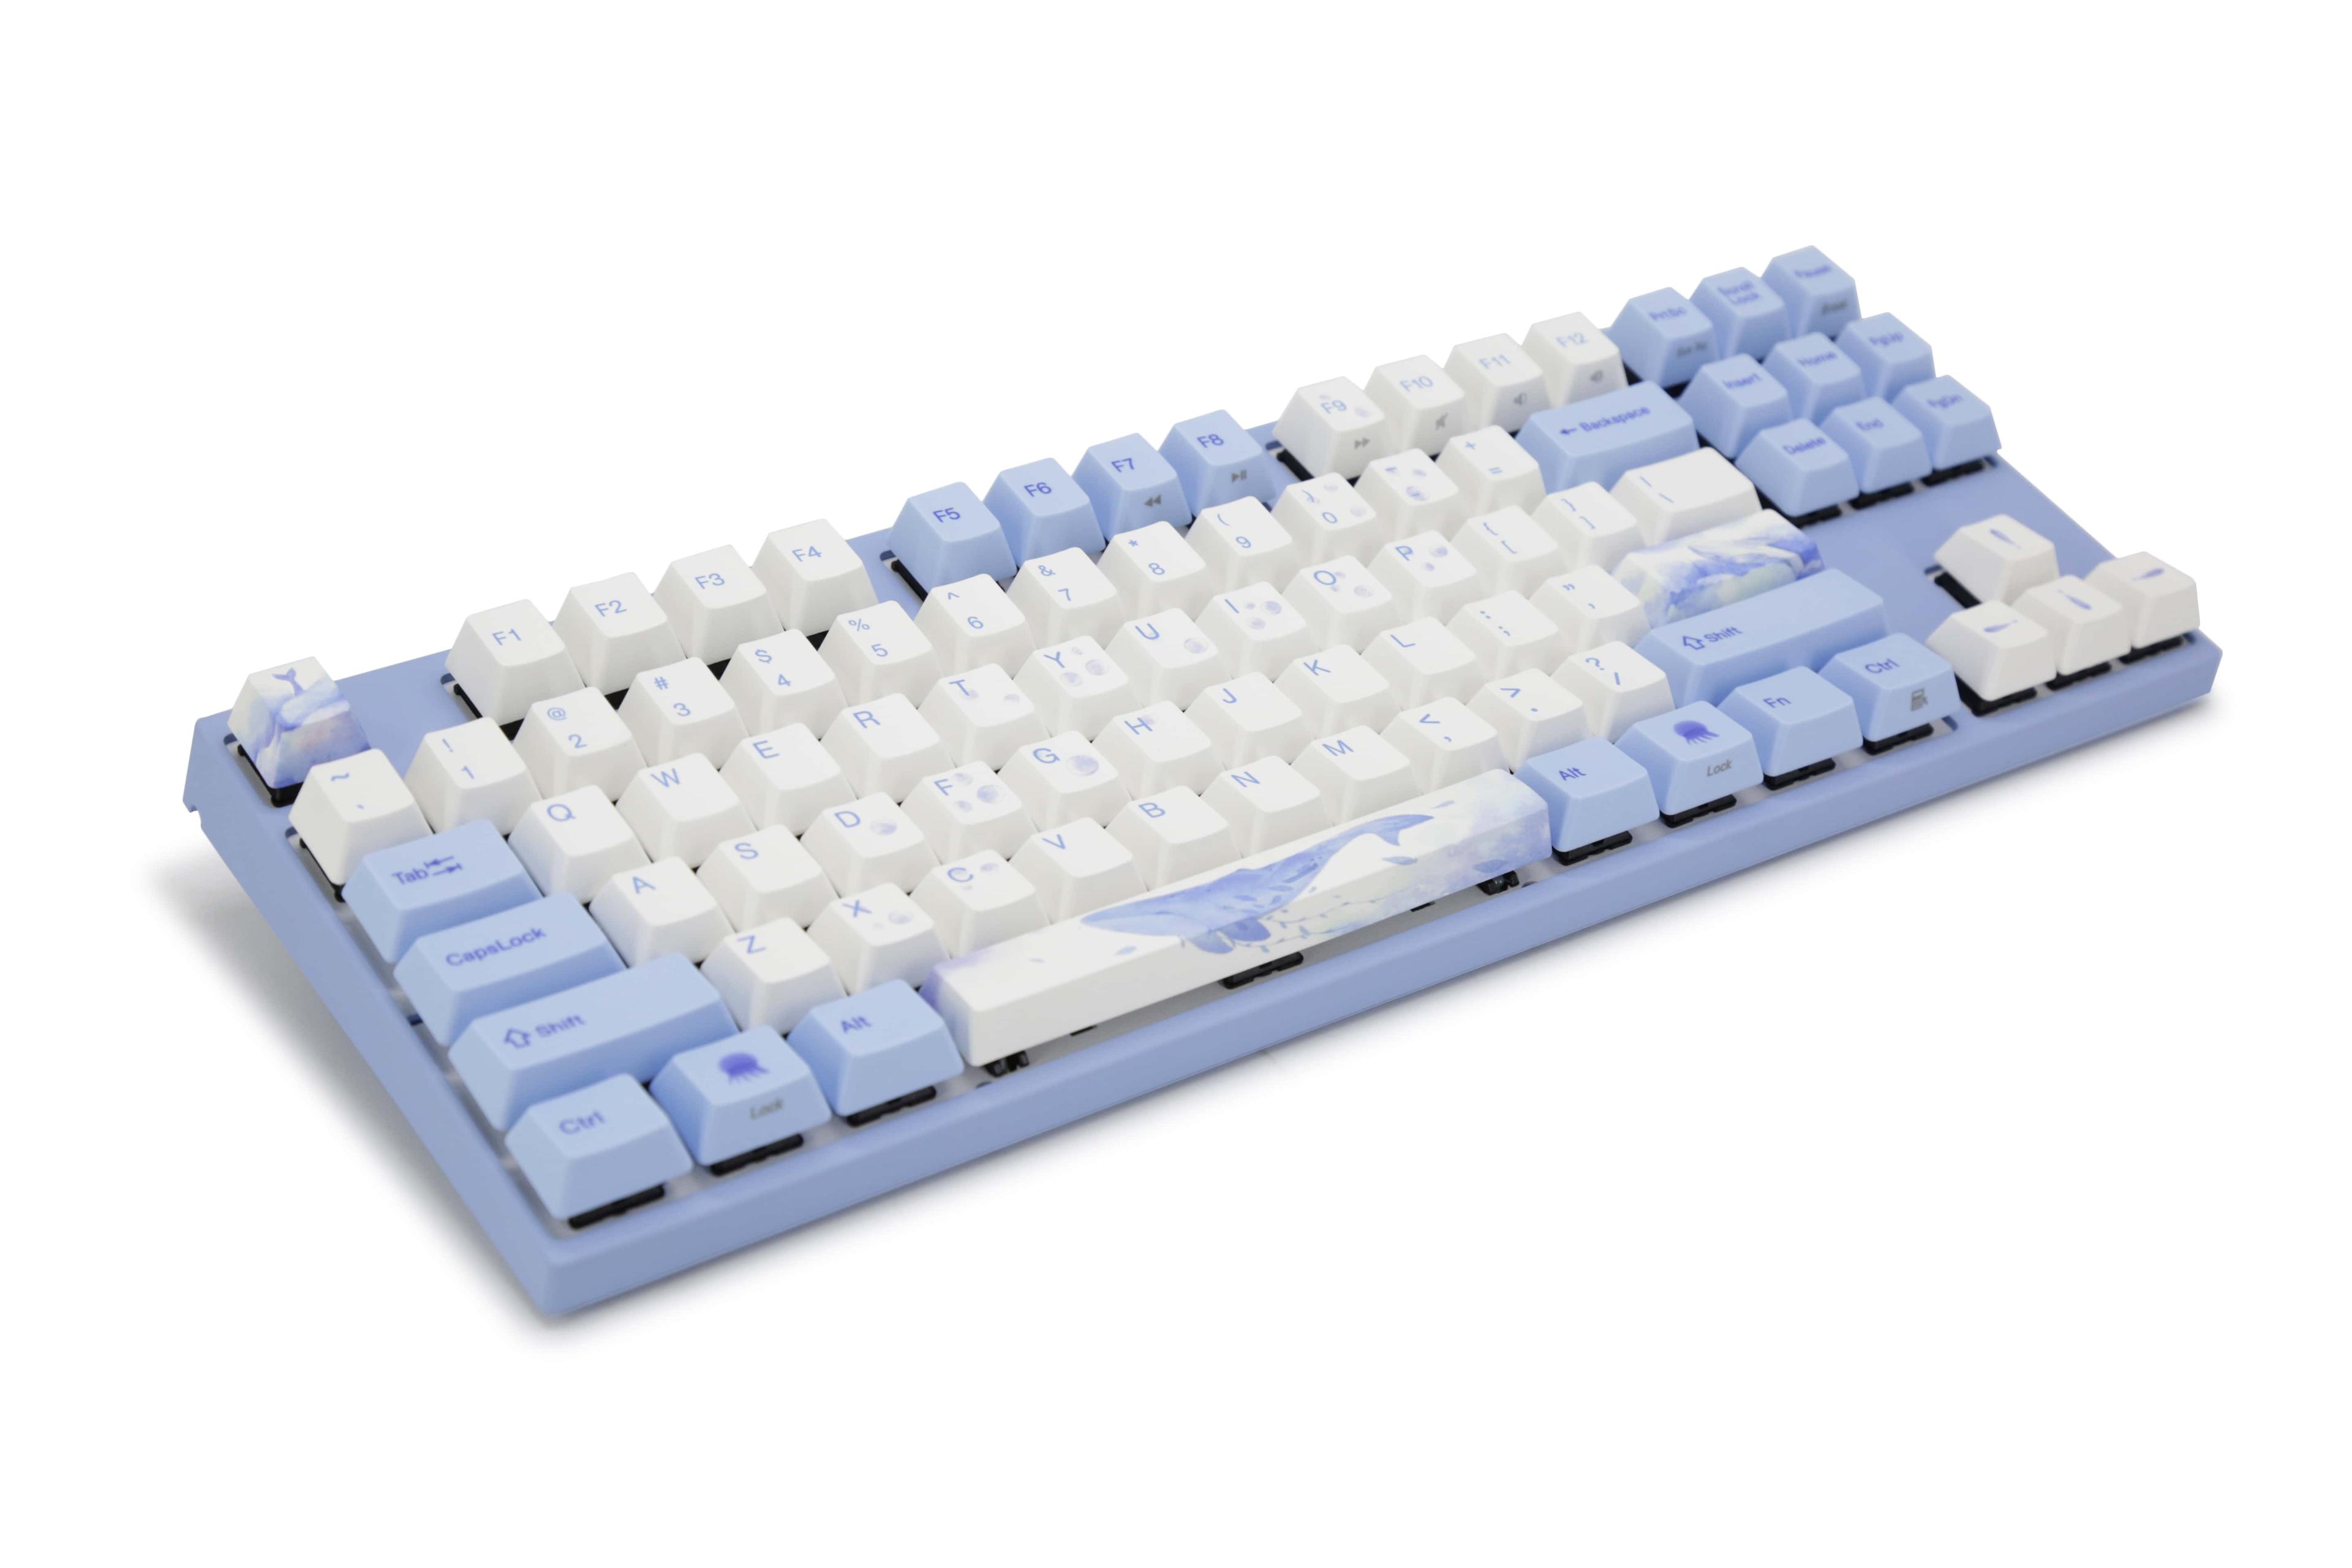 Varmilo VA87M Sea Melody Mechanical Keyboard with Cherry MX Blue Key Switches